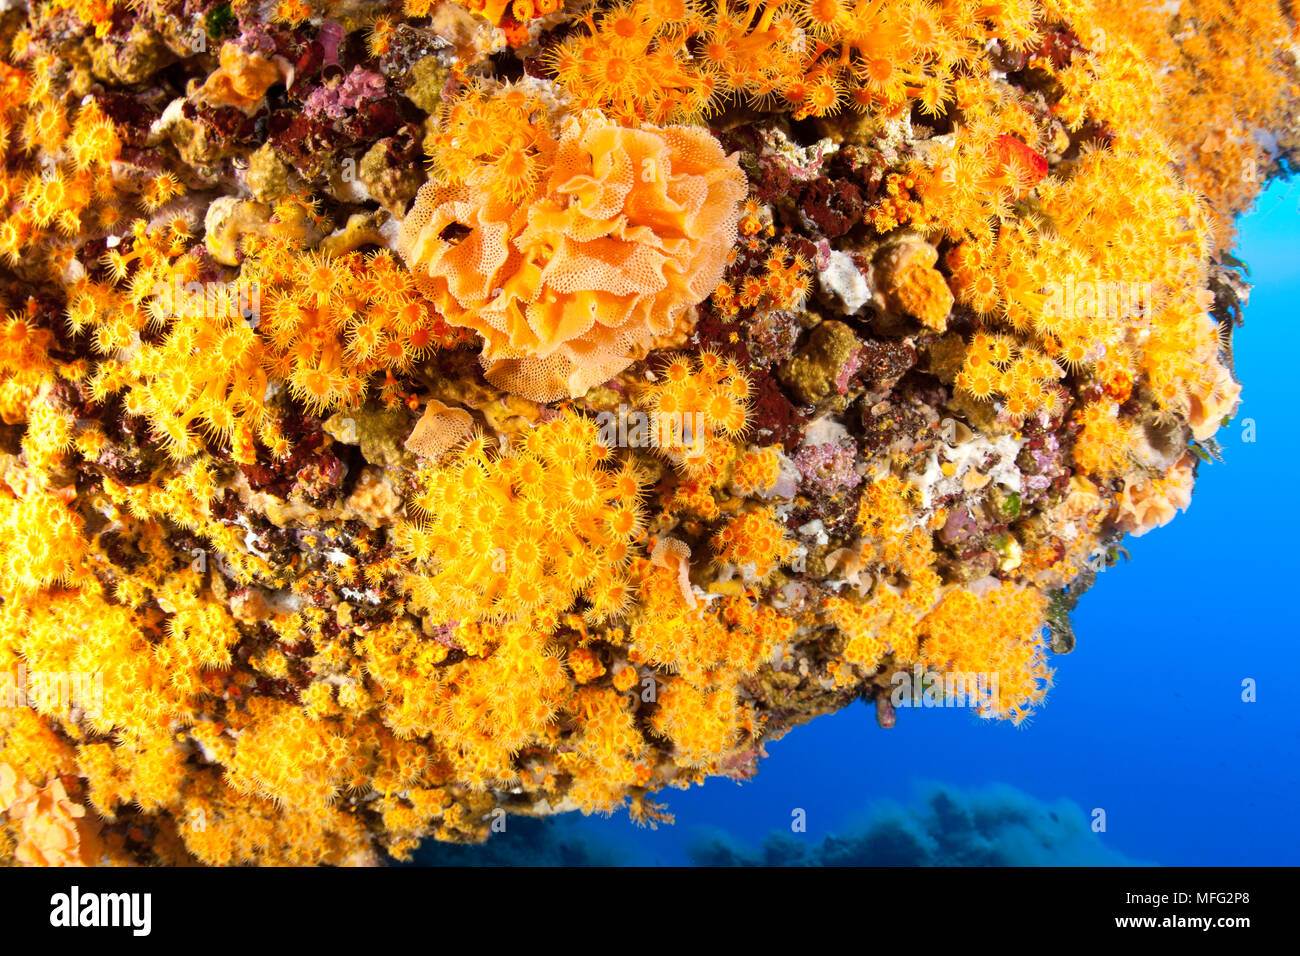 Rock covered with Parazoanthus axinellae and Bryozoa, Sertella sp. , 'La Botte' dive site, Ponza island, Italy, Tyrrhenian Sea, Mediterranean Stock Photo